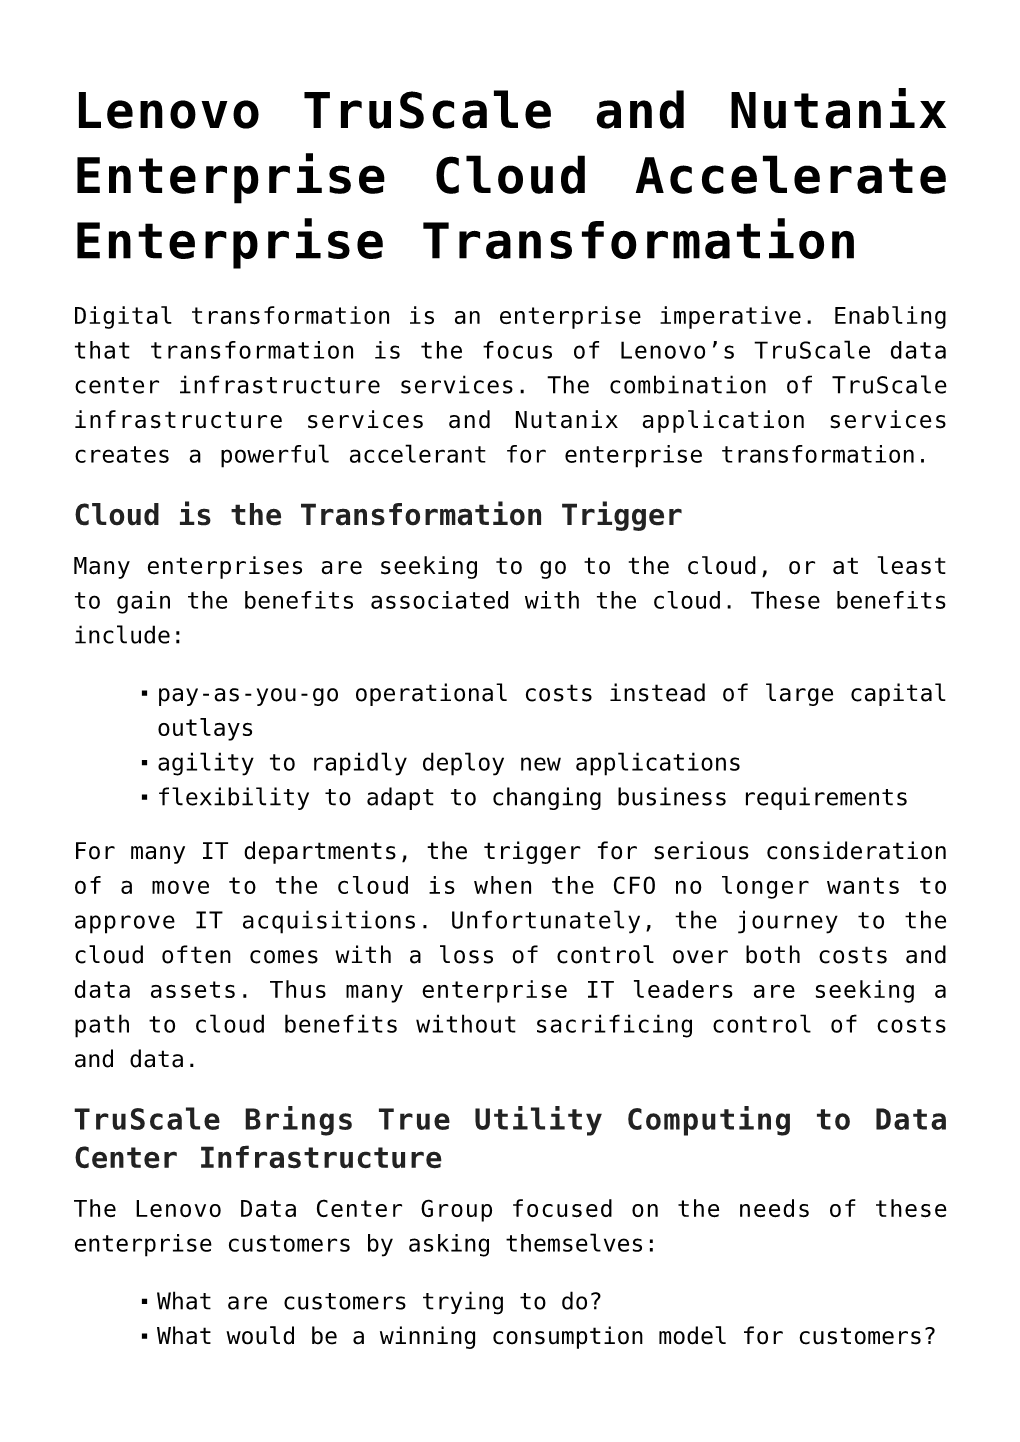 Lenovo Truscale and Nutanix Enterprise Cloud Accelerate Enterprise Transformation